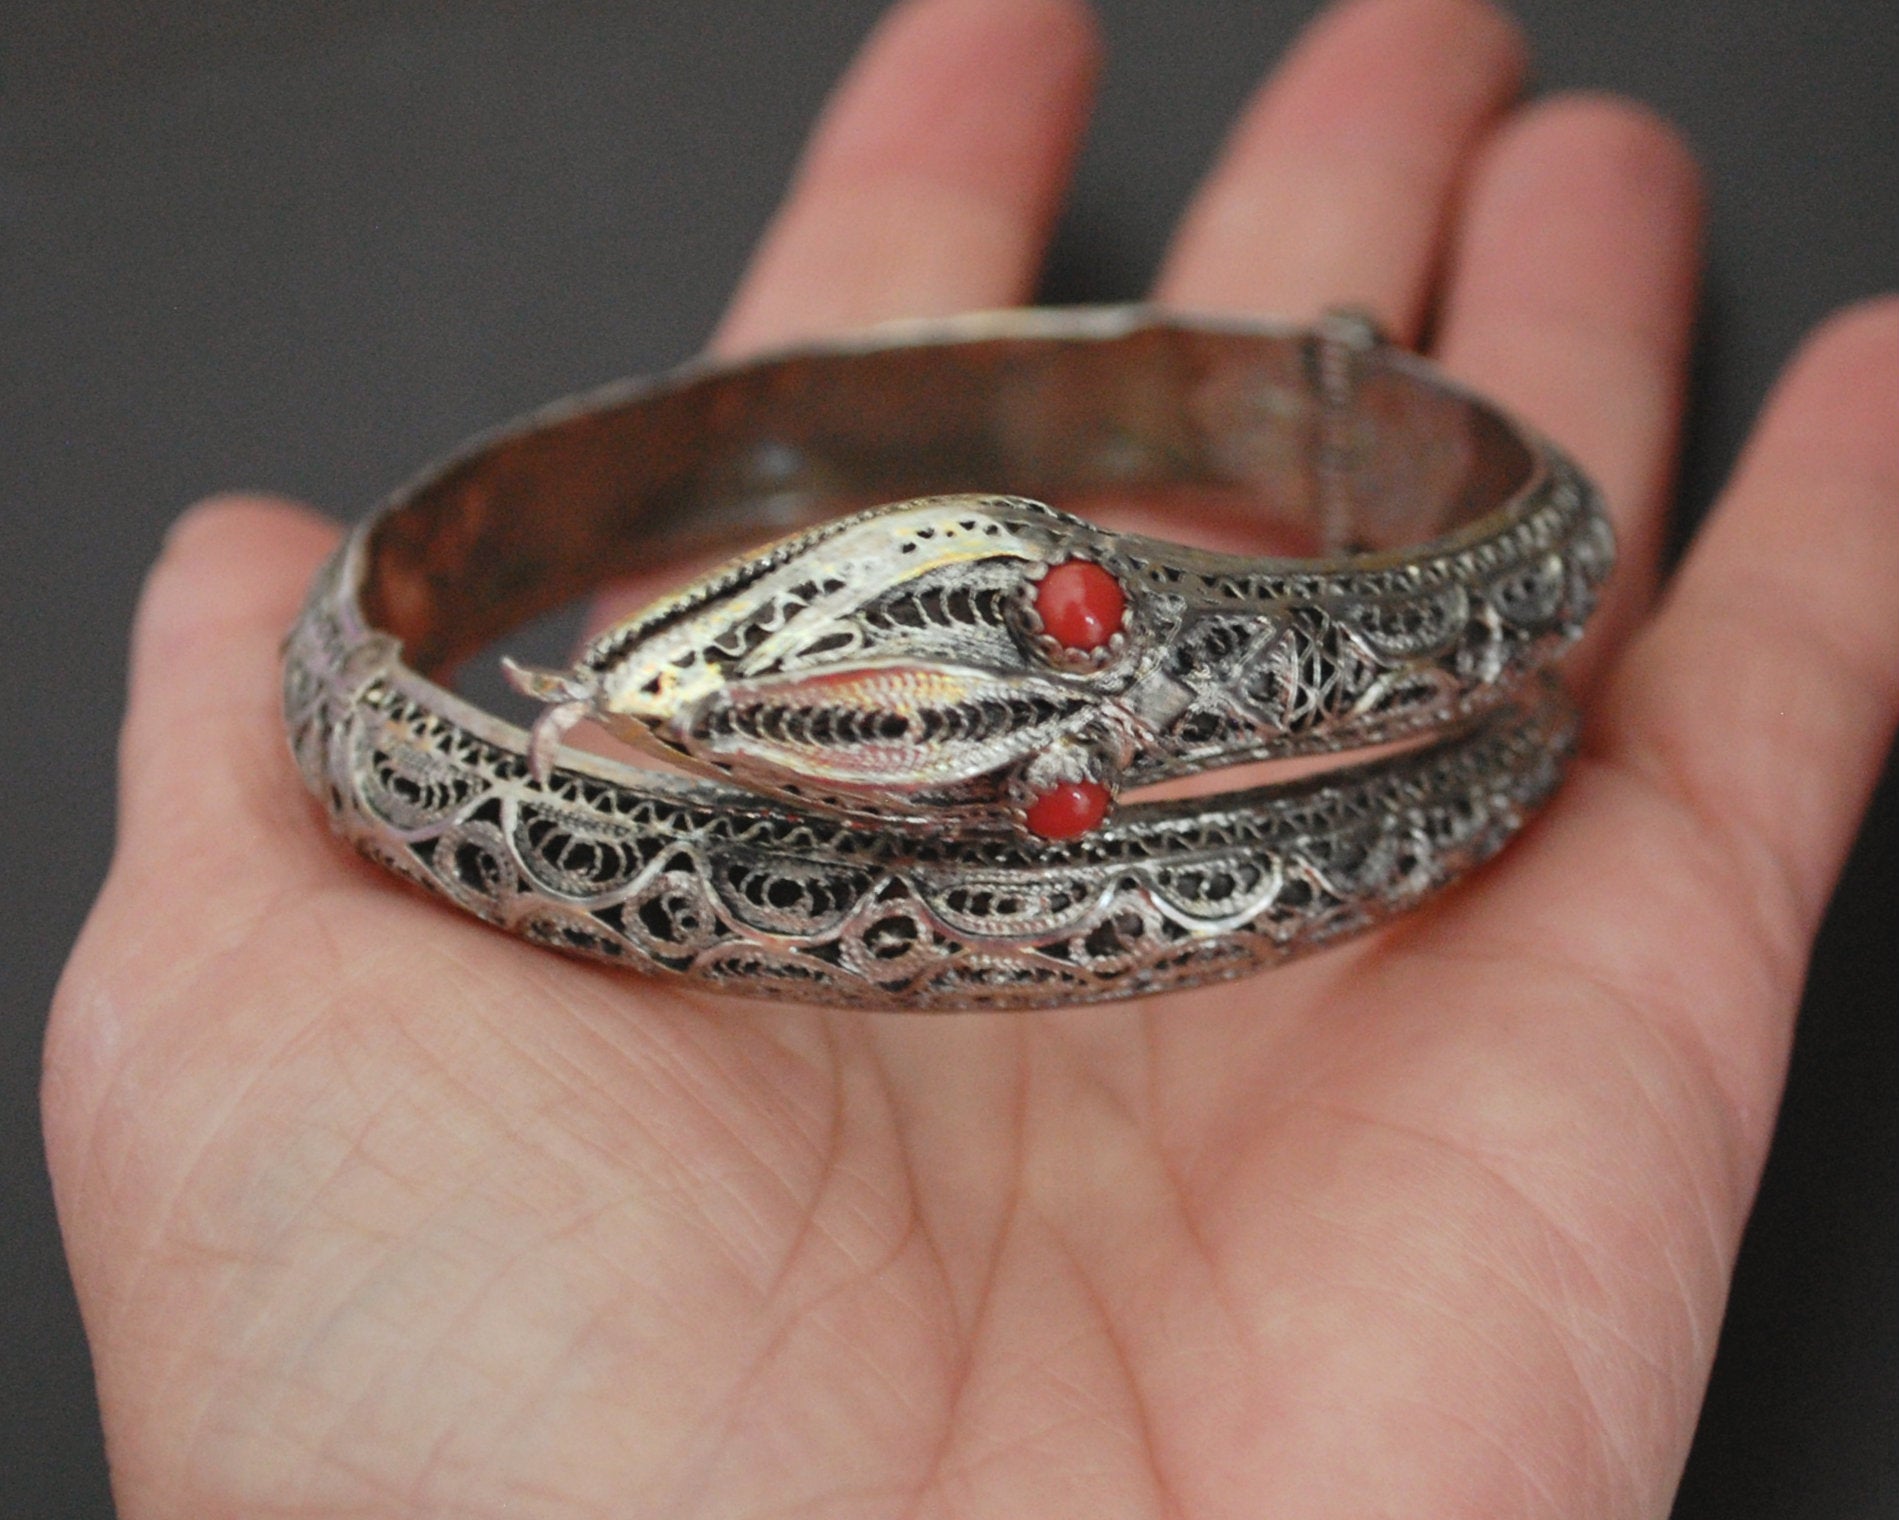 Antique Ottoman Filigree Snake Bracelet with Coral Eyes